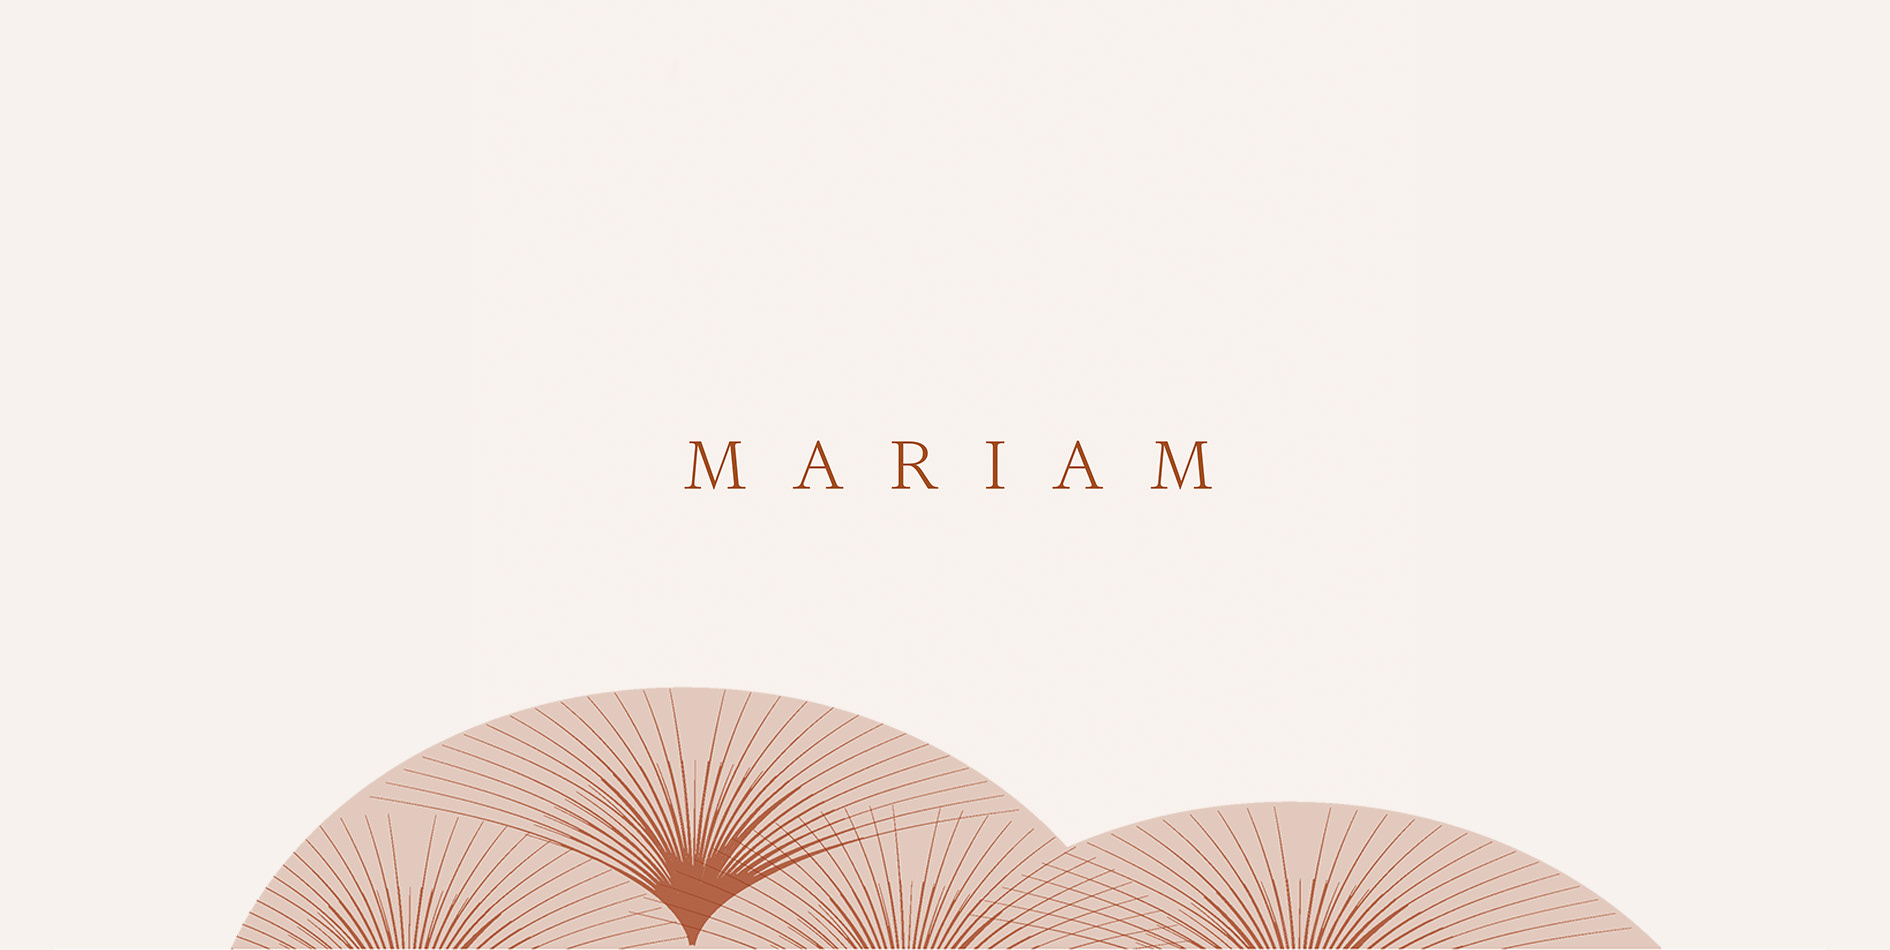 Frashion Brand Mariam Logo and Wordmark - Vancouver Design Agency